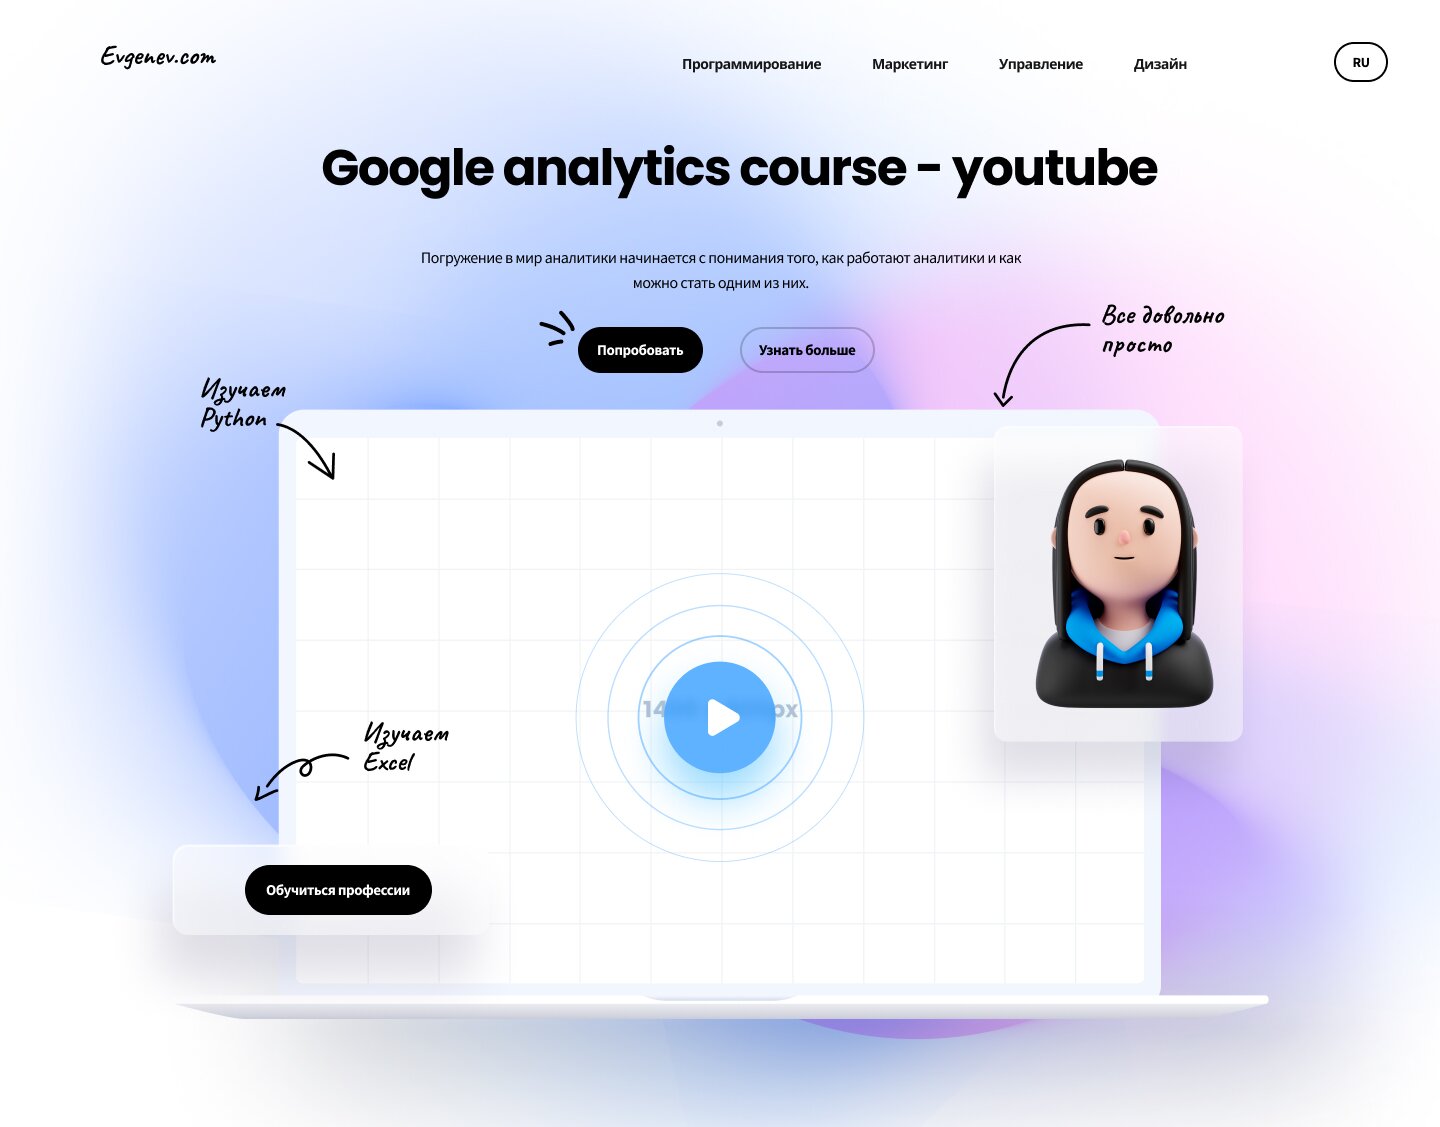 7 Google analytics course - youtube